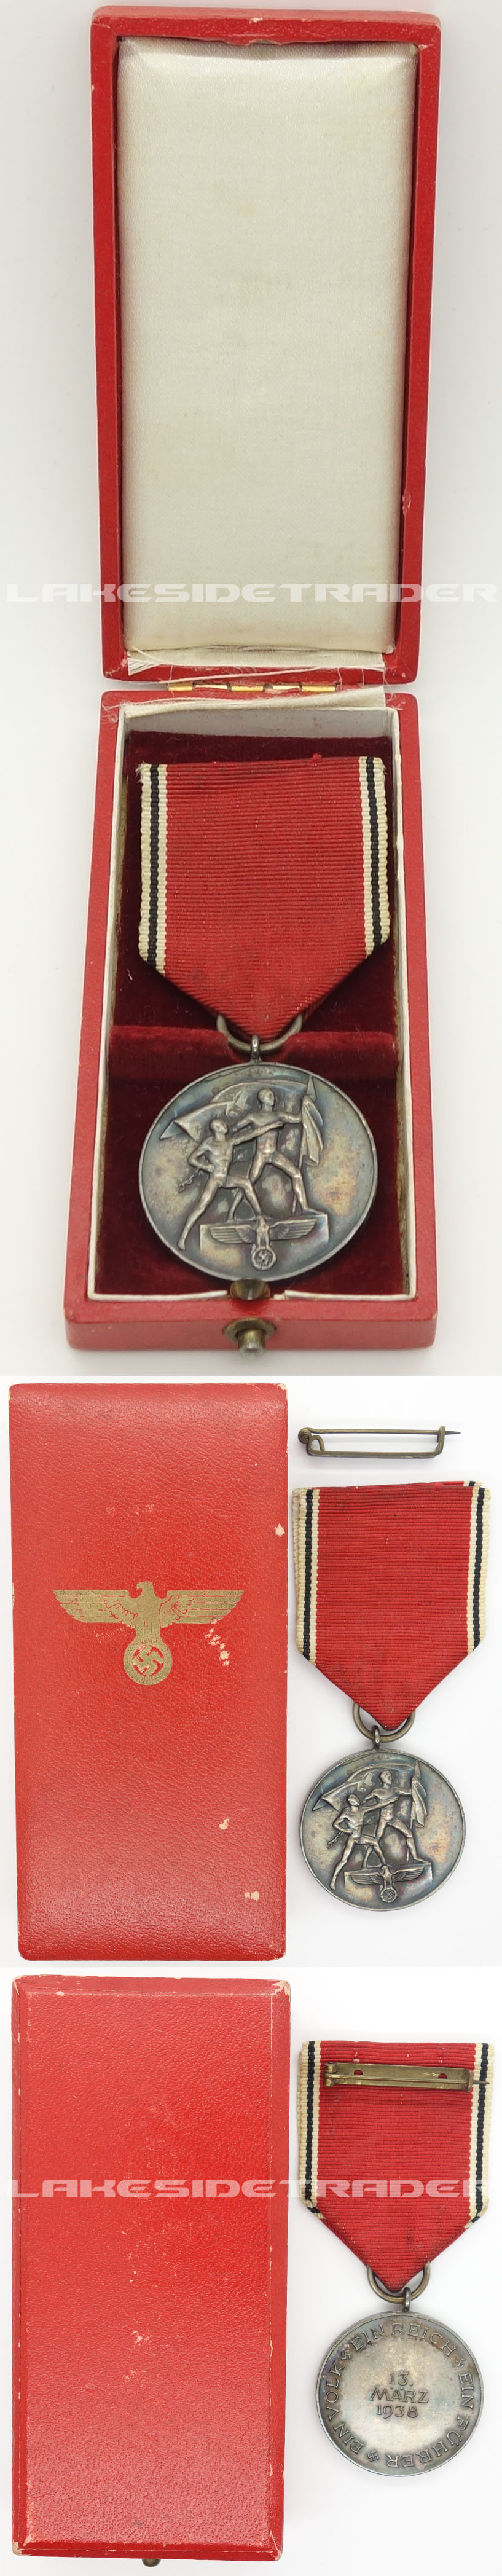 Cased 13 March 1938 Commemorative Medal (Austria)